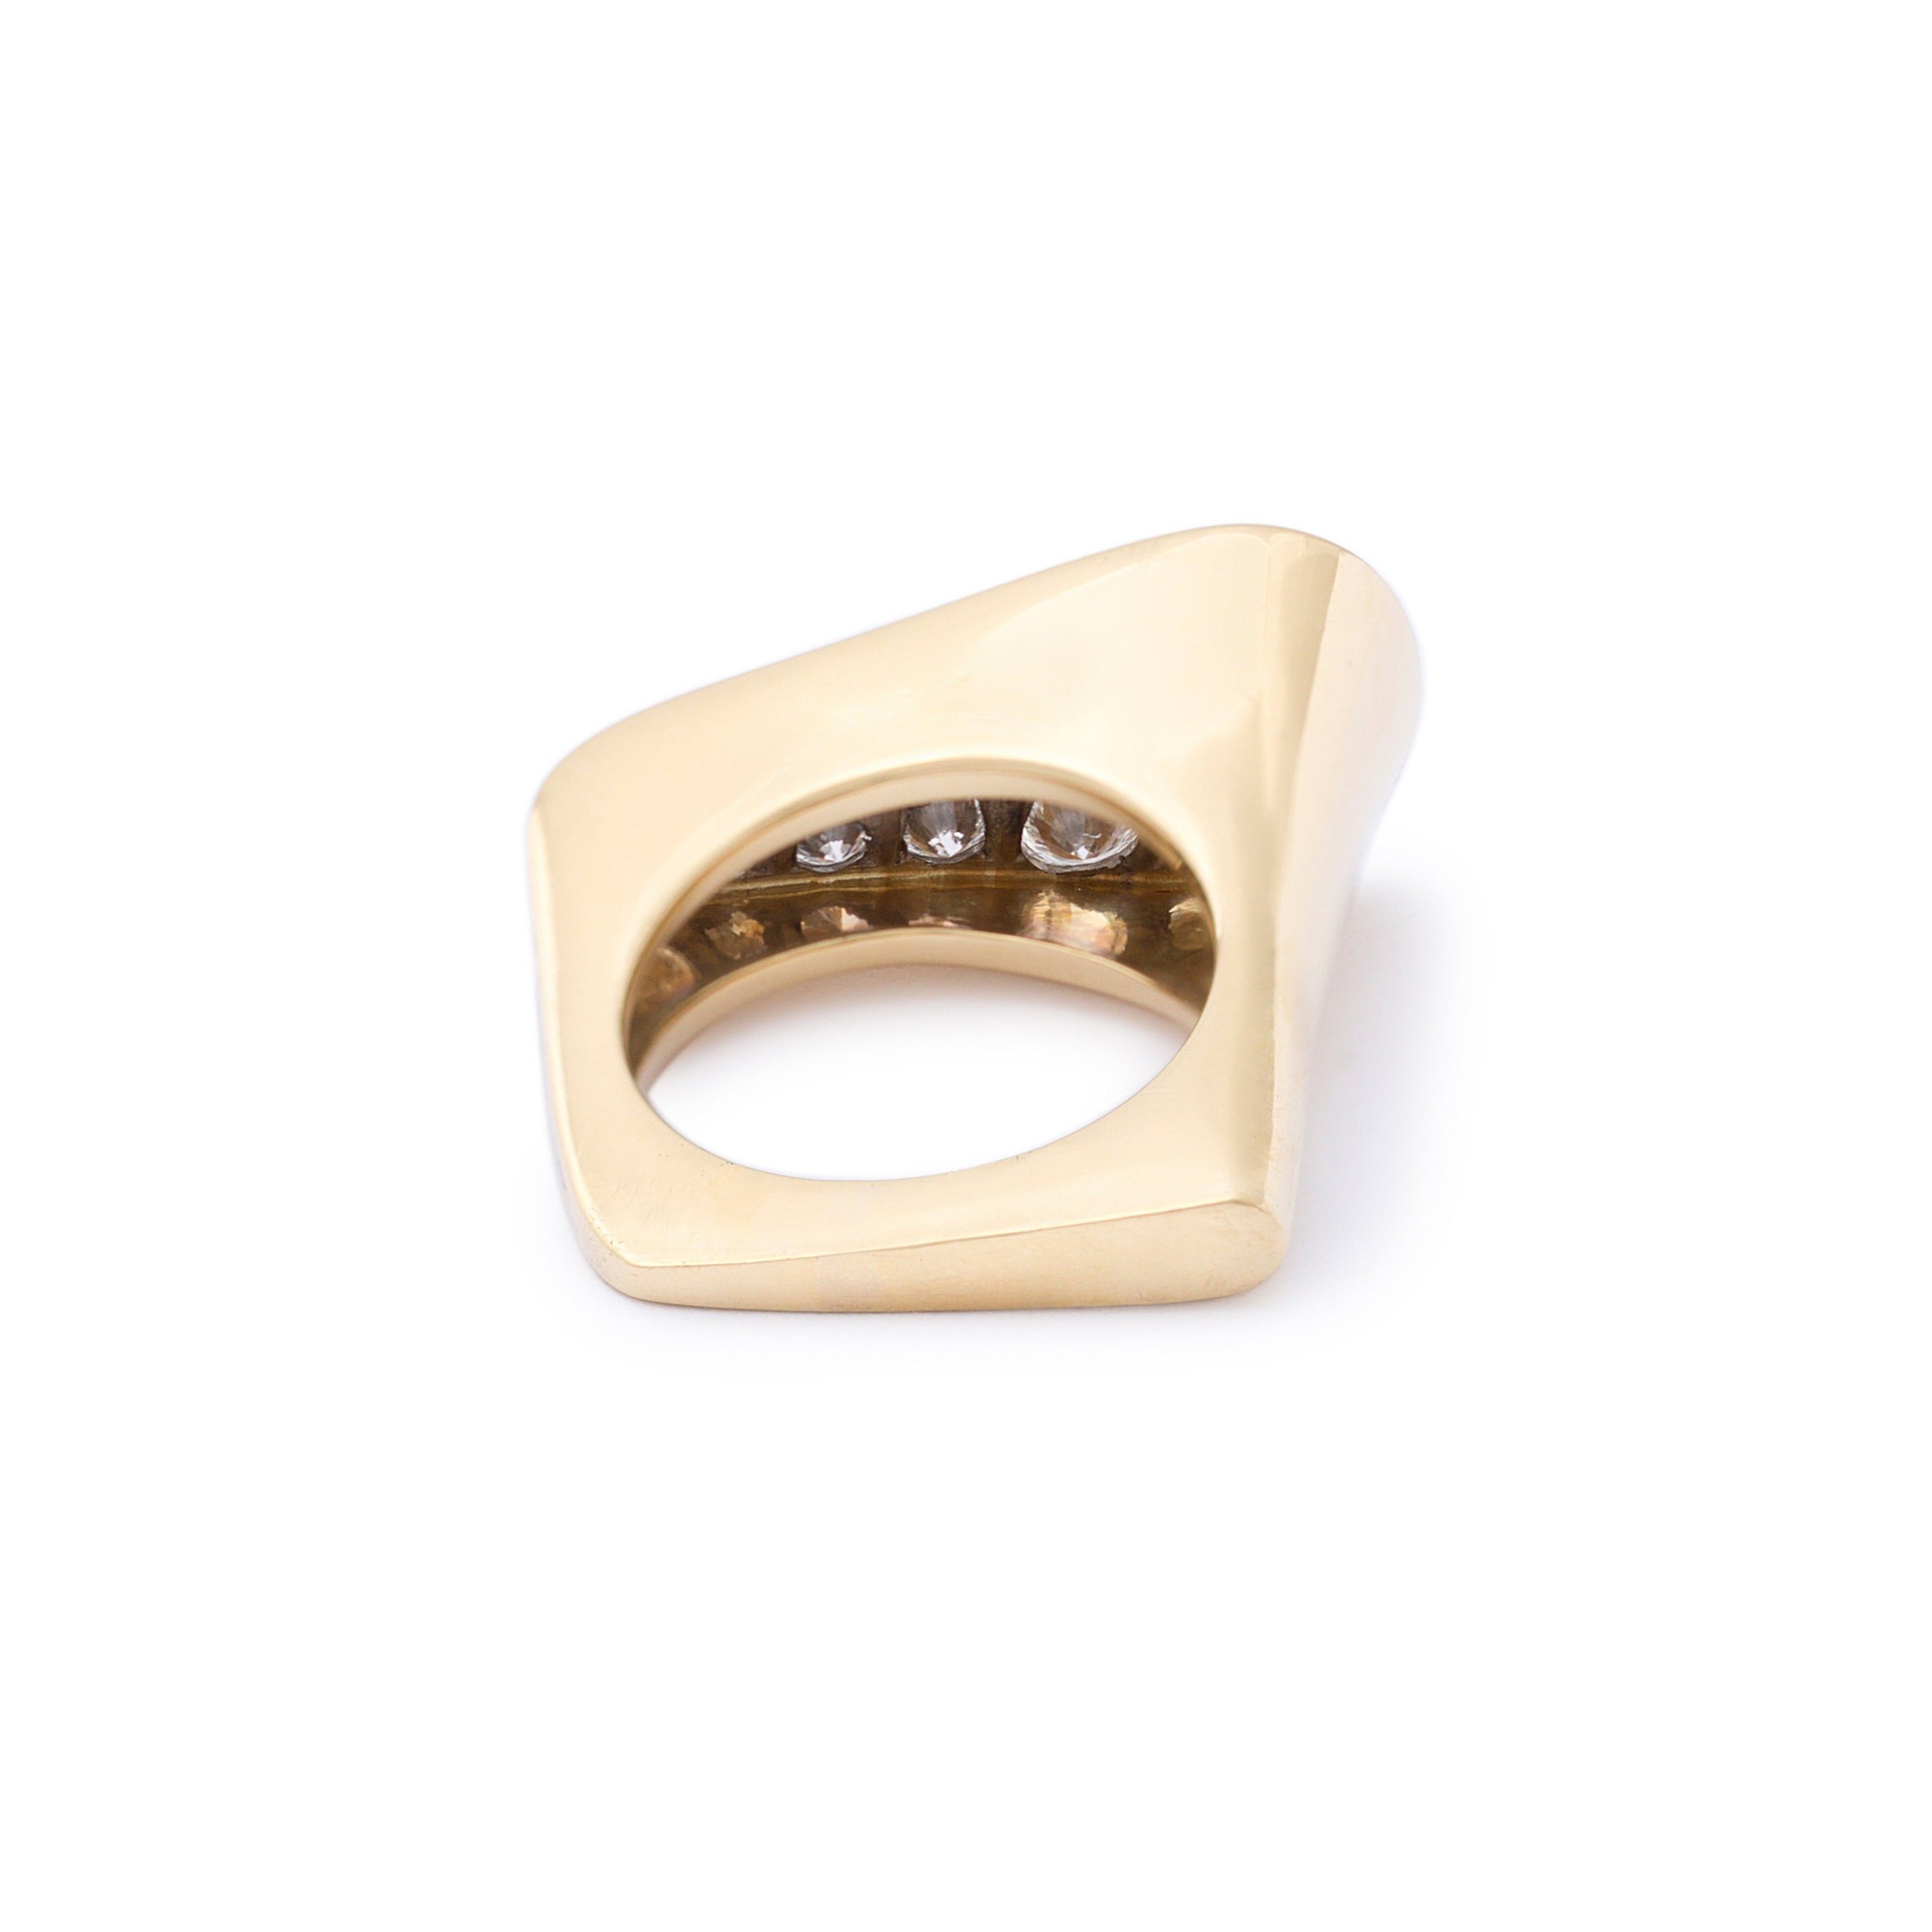 Kutchinsky Modernist Diamond and 18k Gold Cocktail Ring